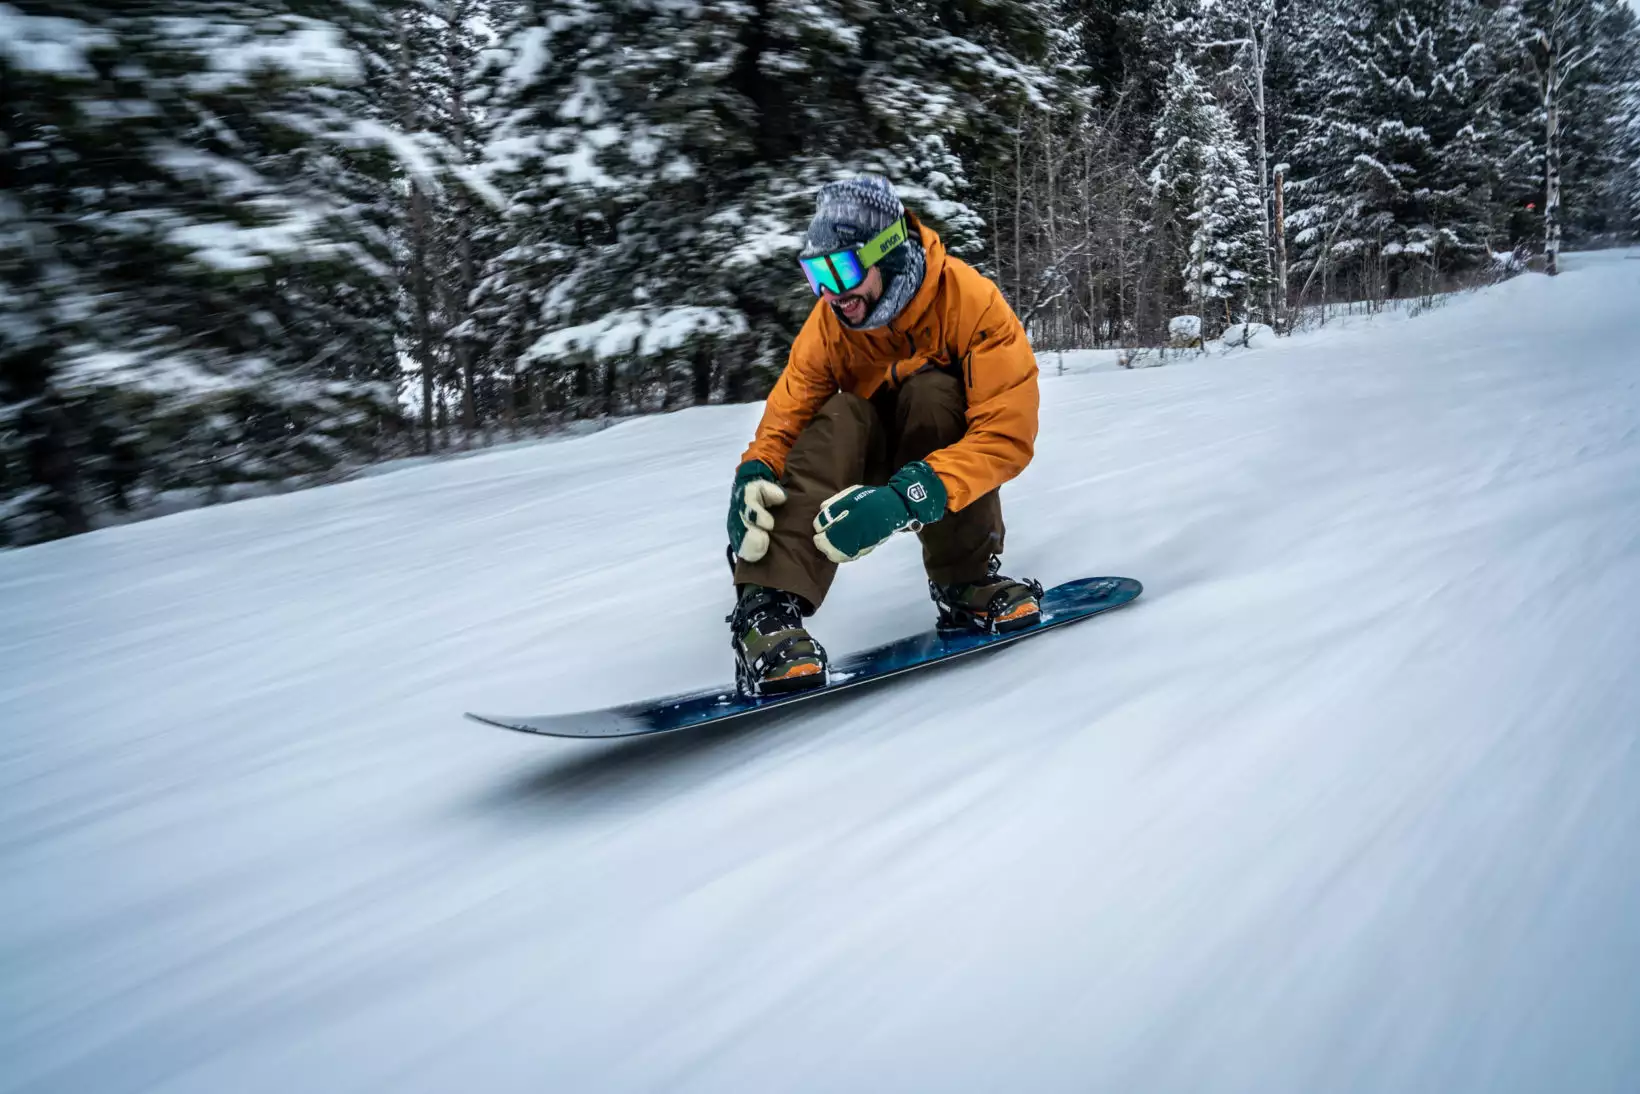 Snowboarding - Exhilarating winter adventures